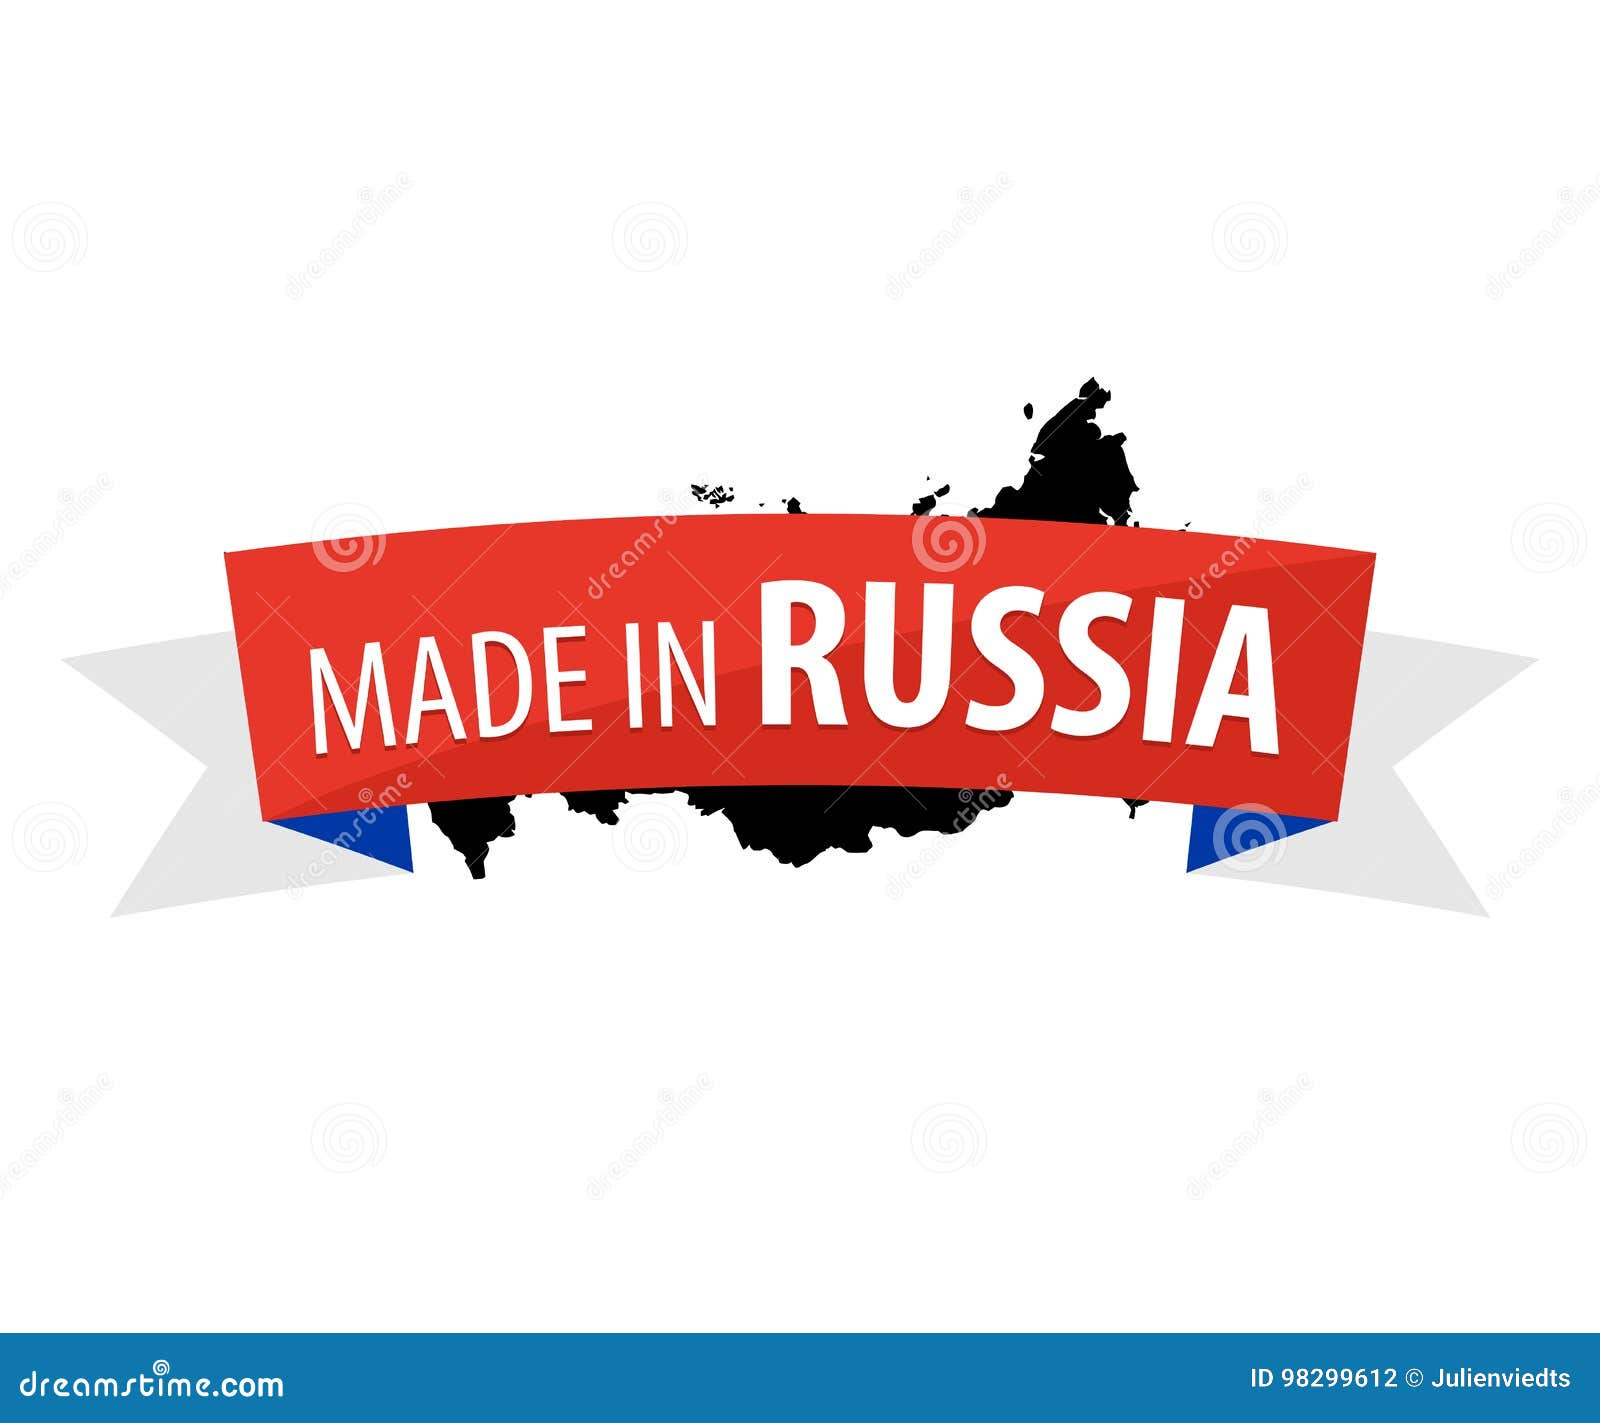 Маде ин румыния. Маде ин Россия. Made in Russia. Made in China логотип. Сделано в Бельгии.